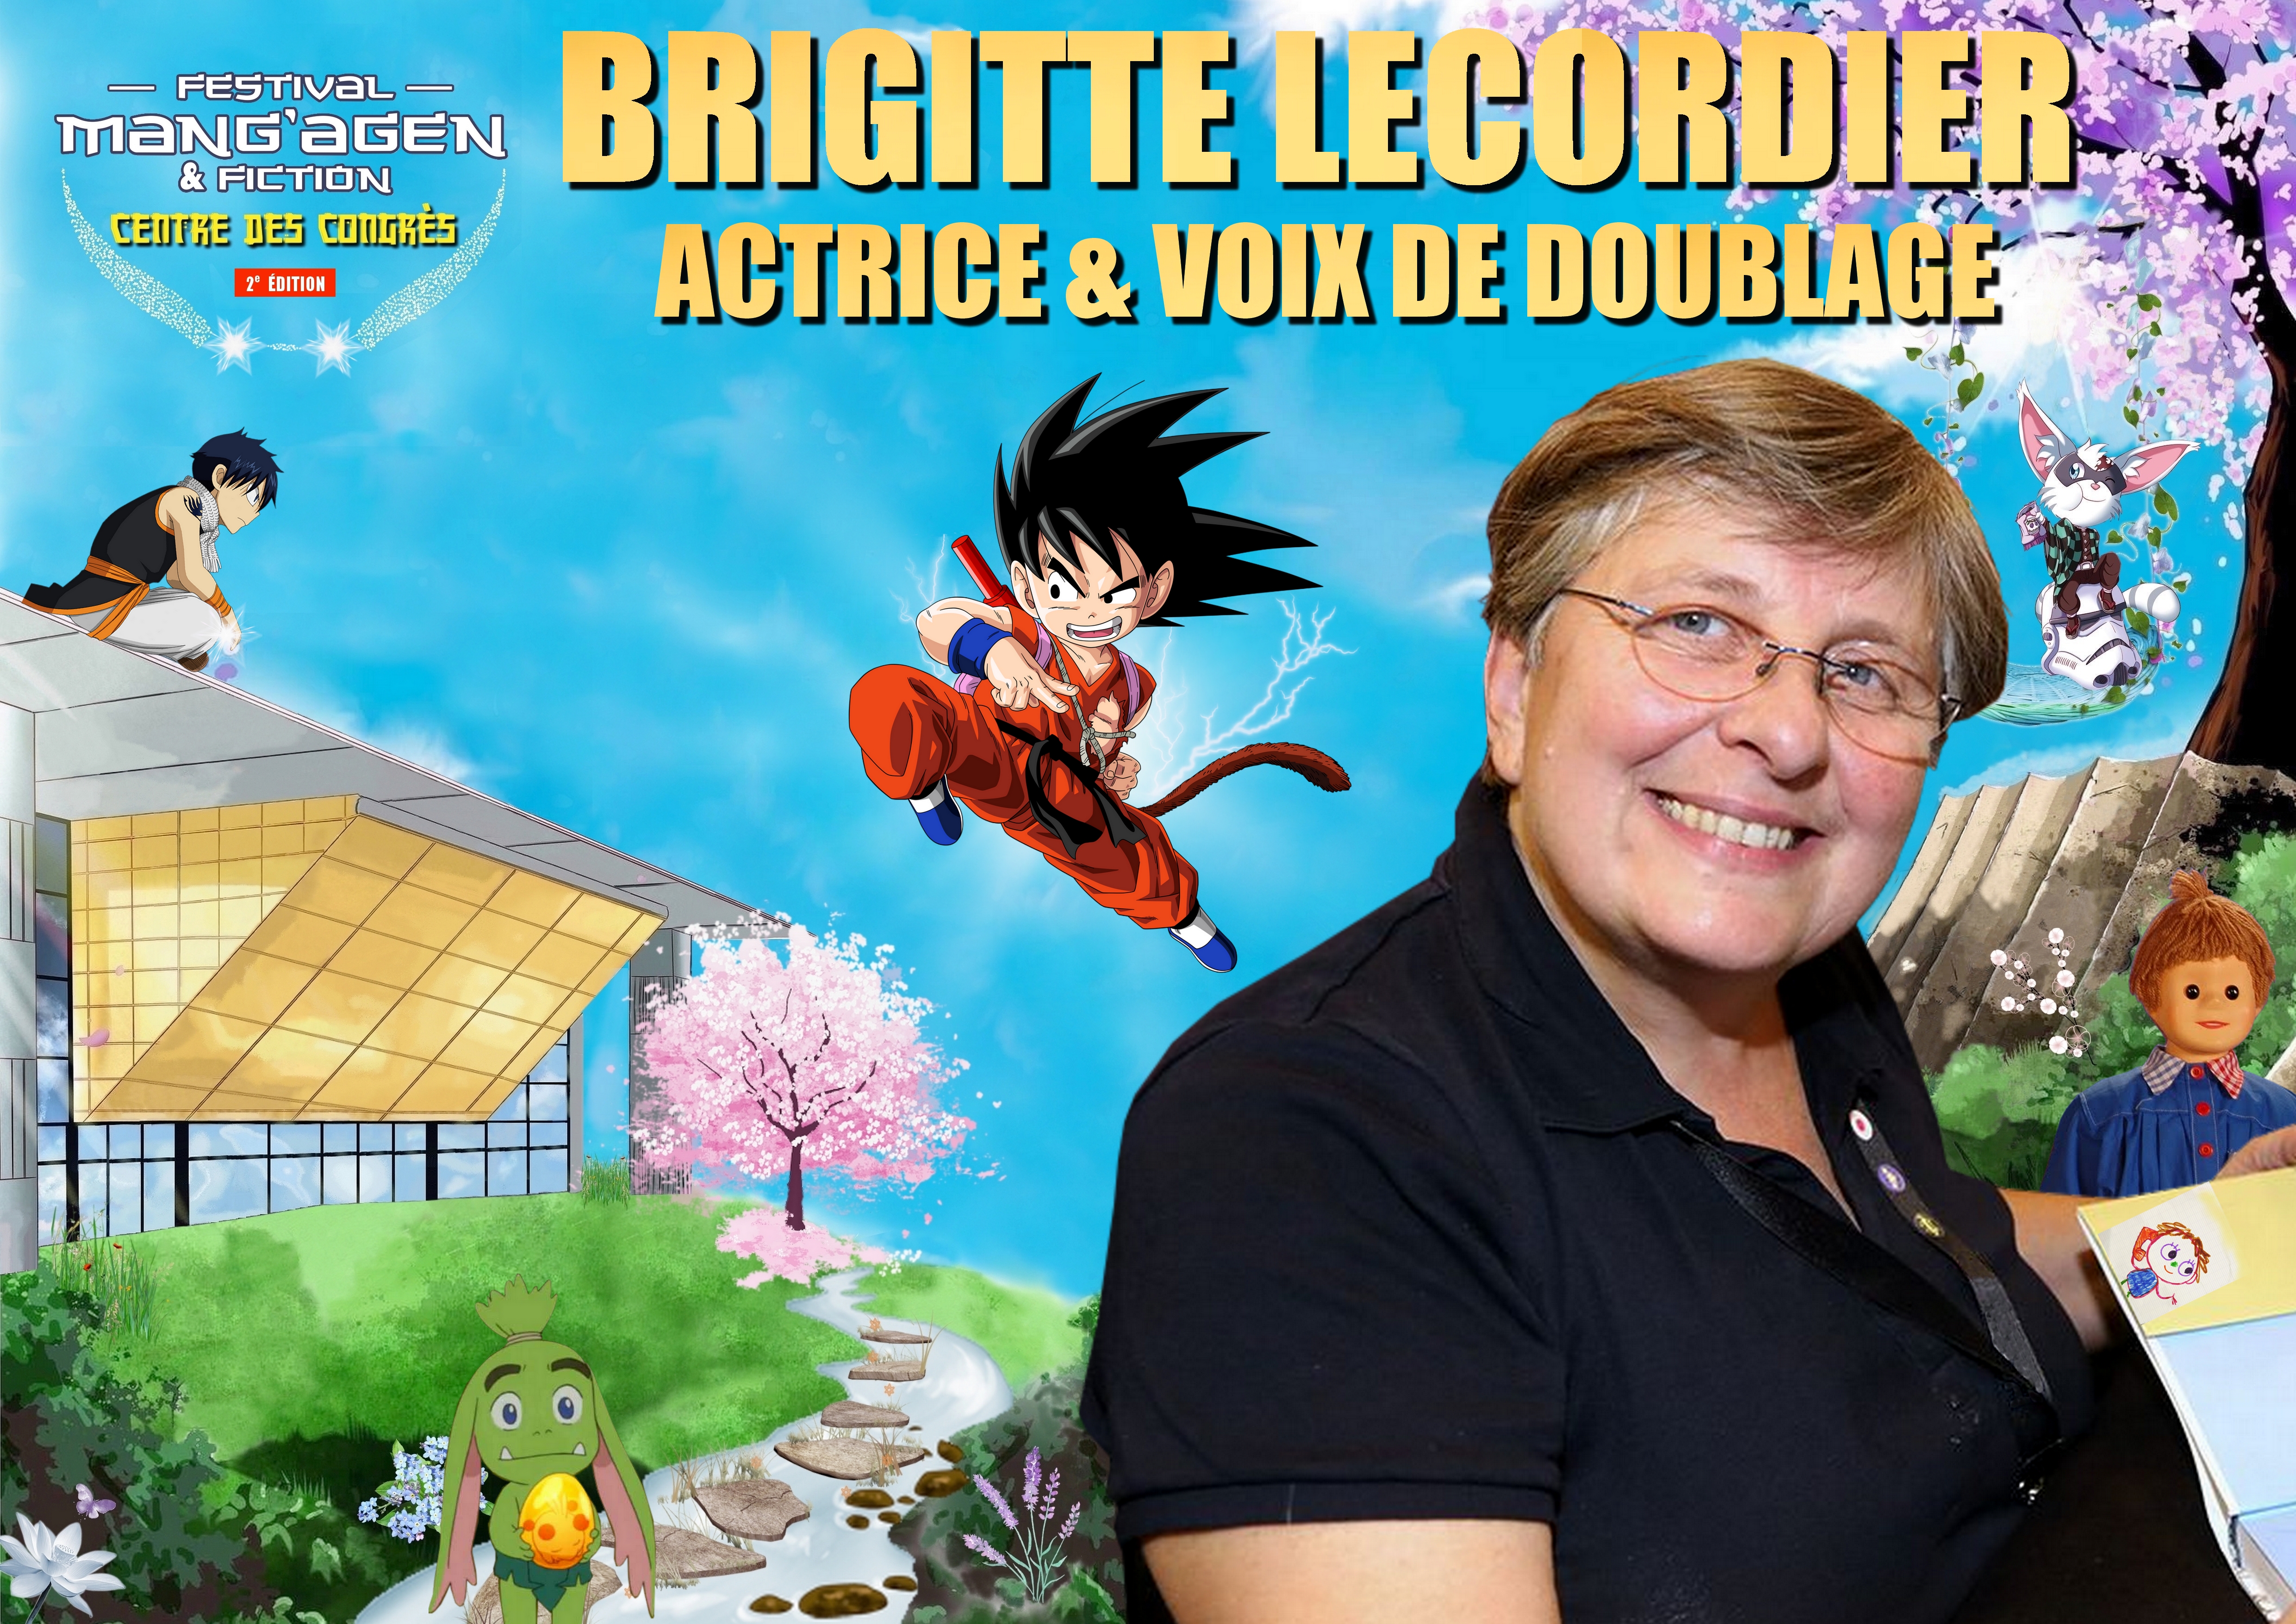 Brigitte Lecordier !